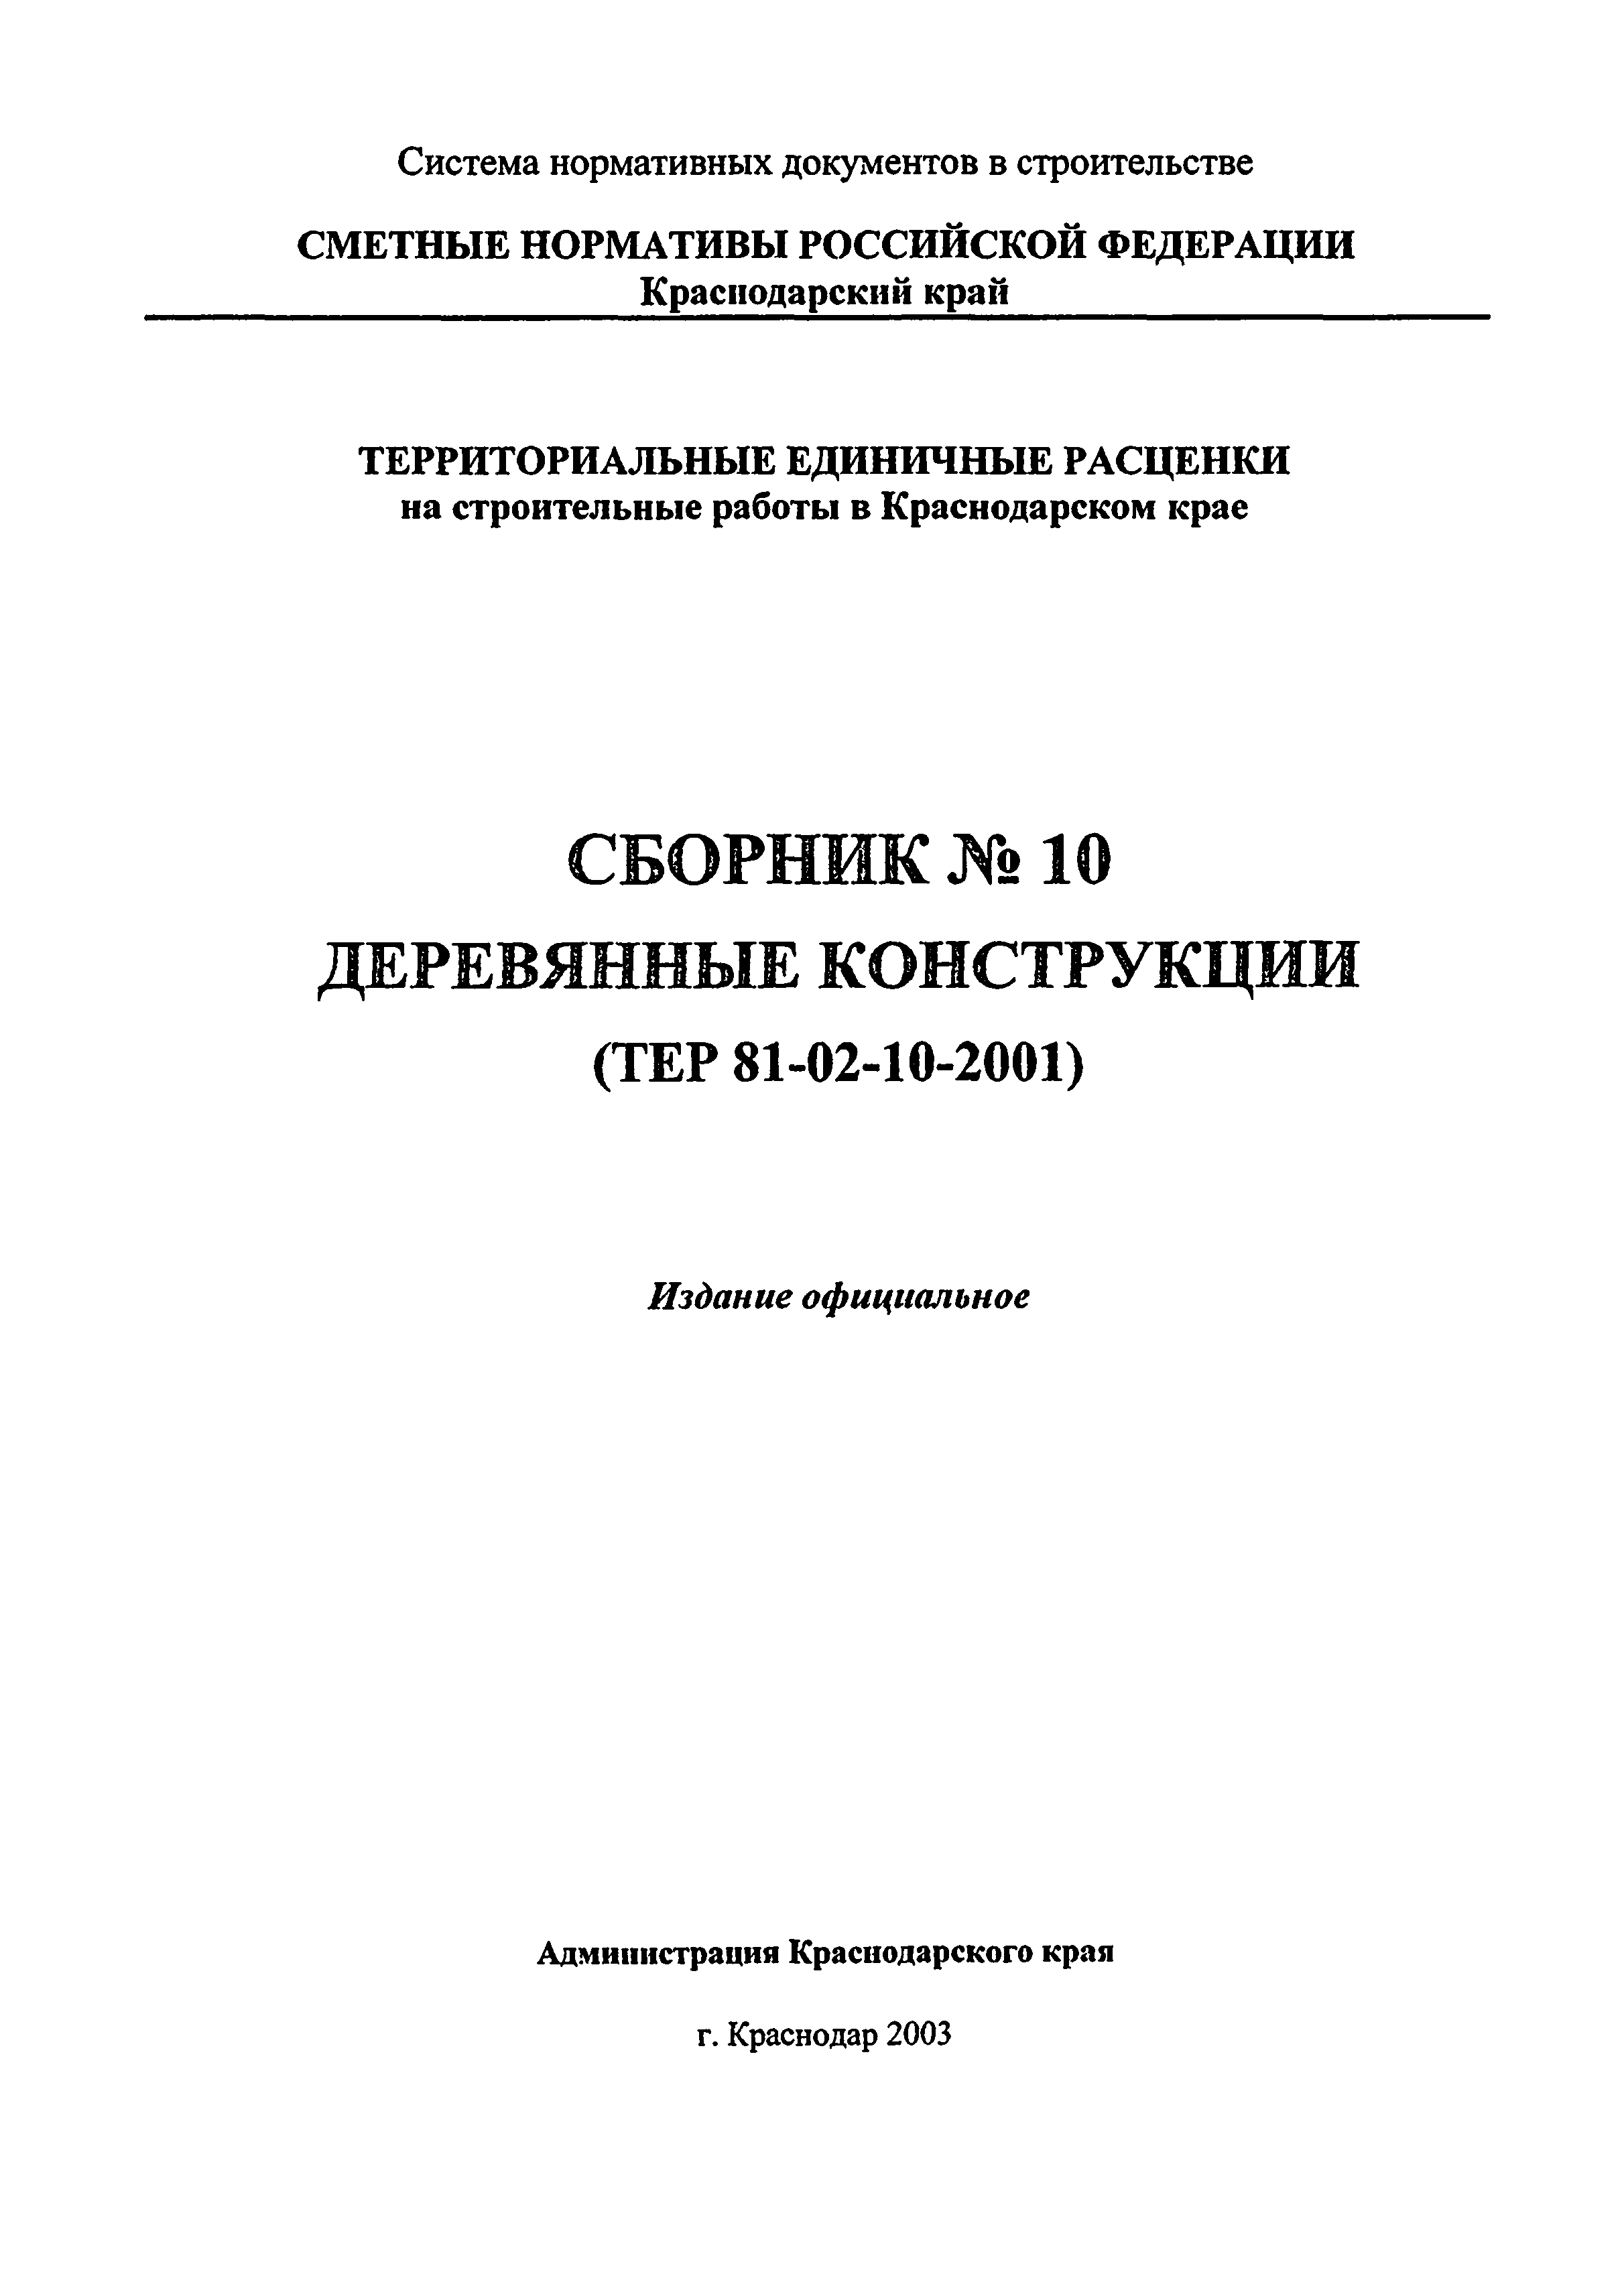 ТЕР Краснодарский край 2001-10